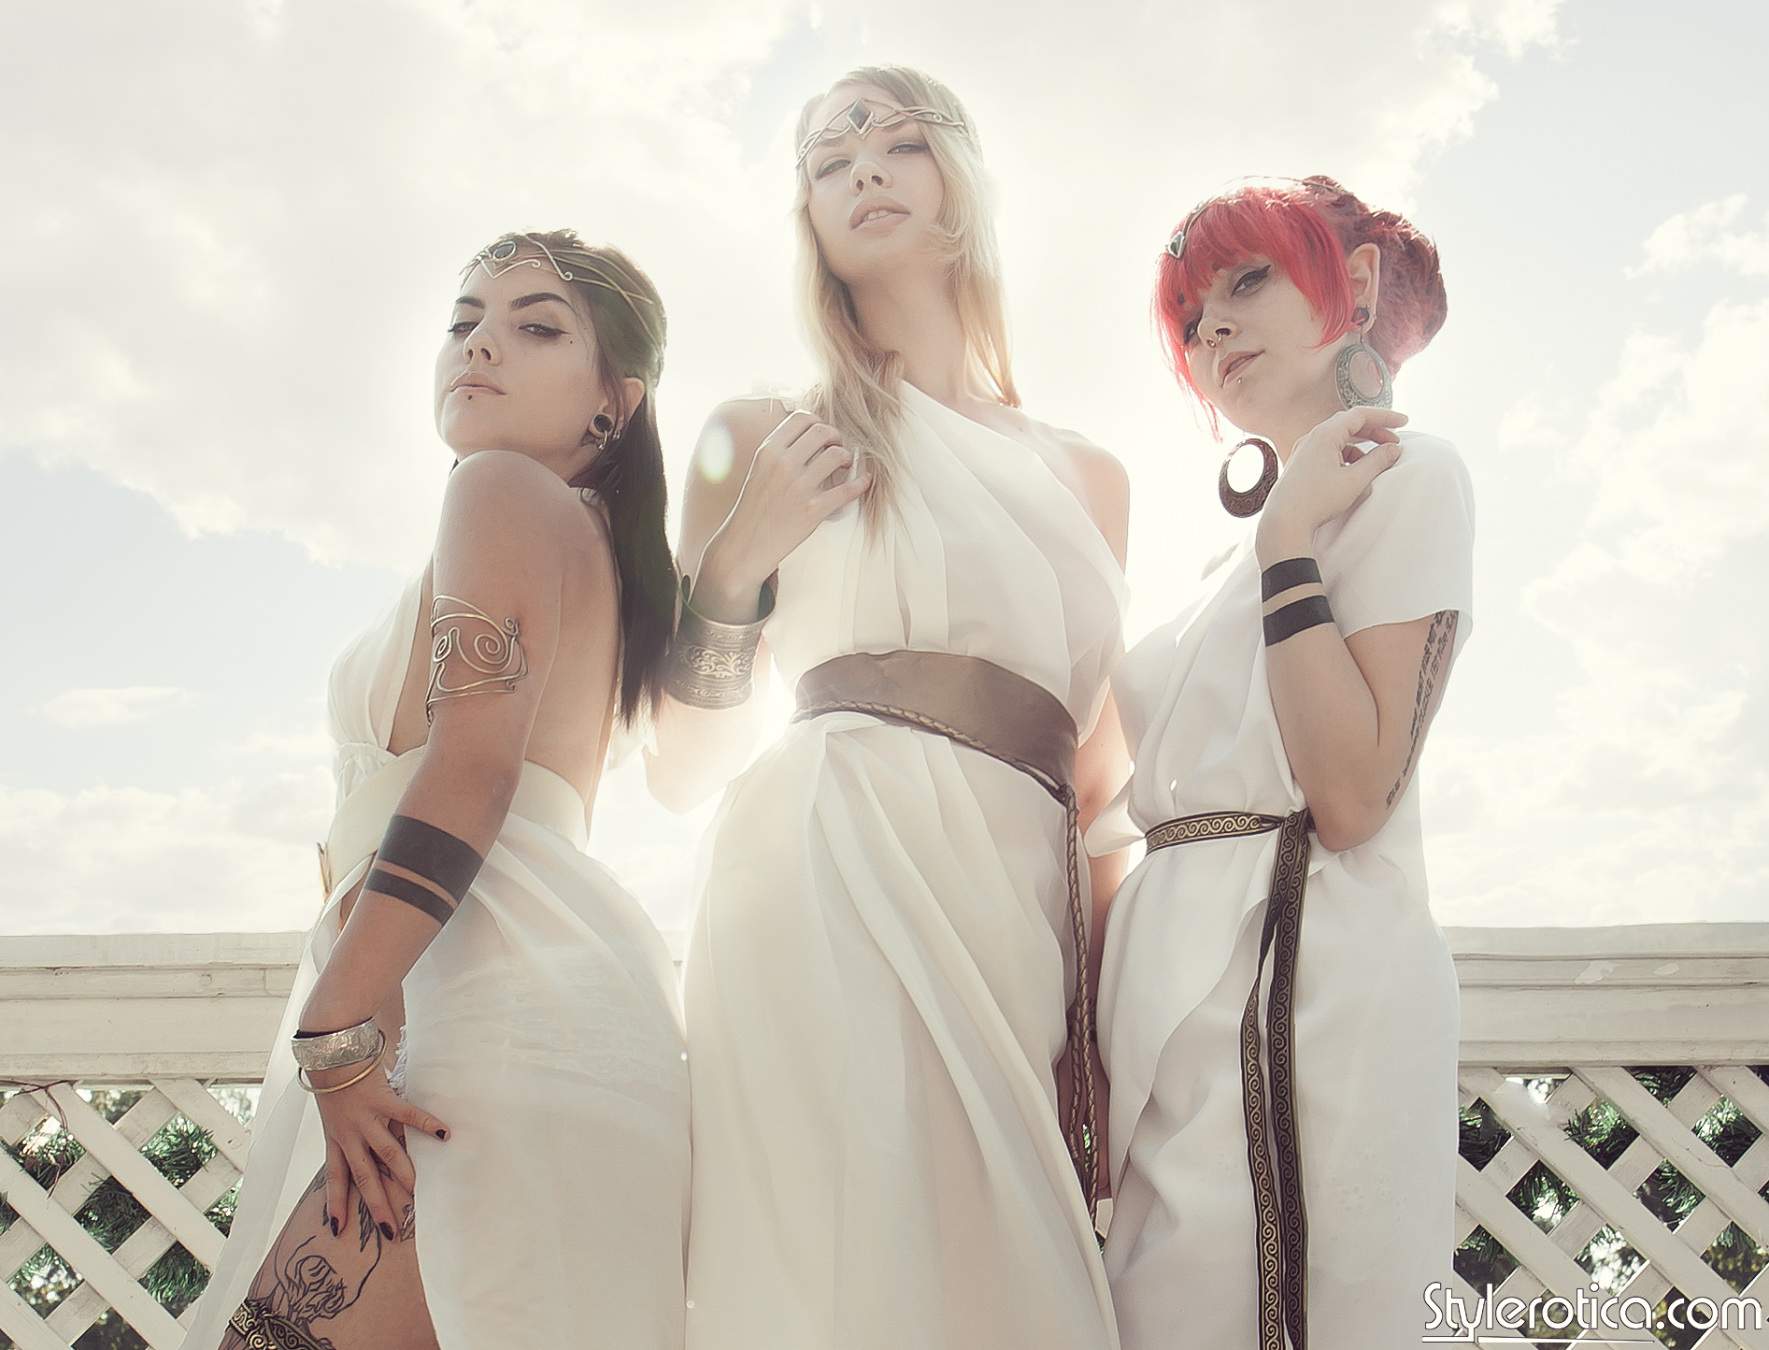 Goddesses (Siamh, Jasmine Suzanna, Ecy)